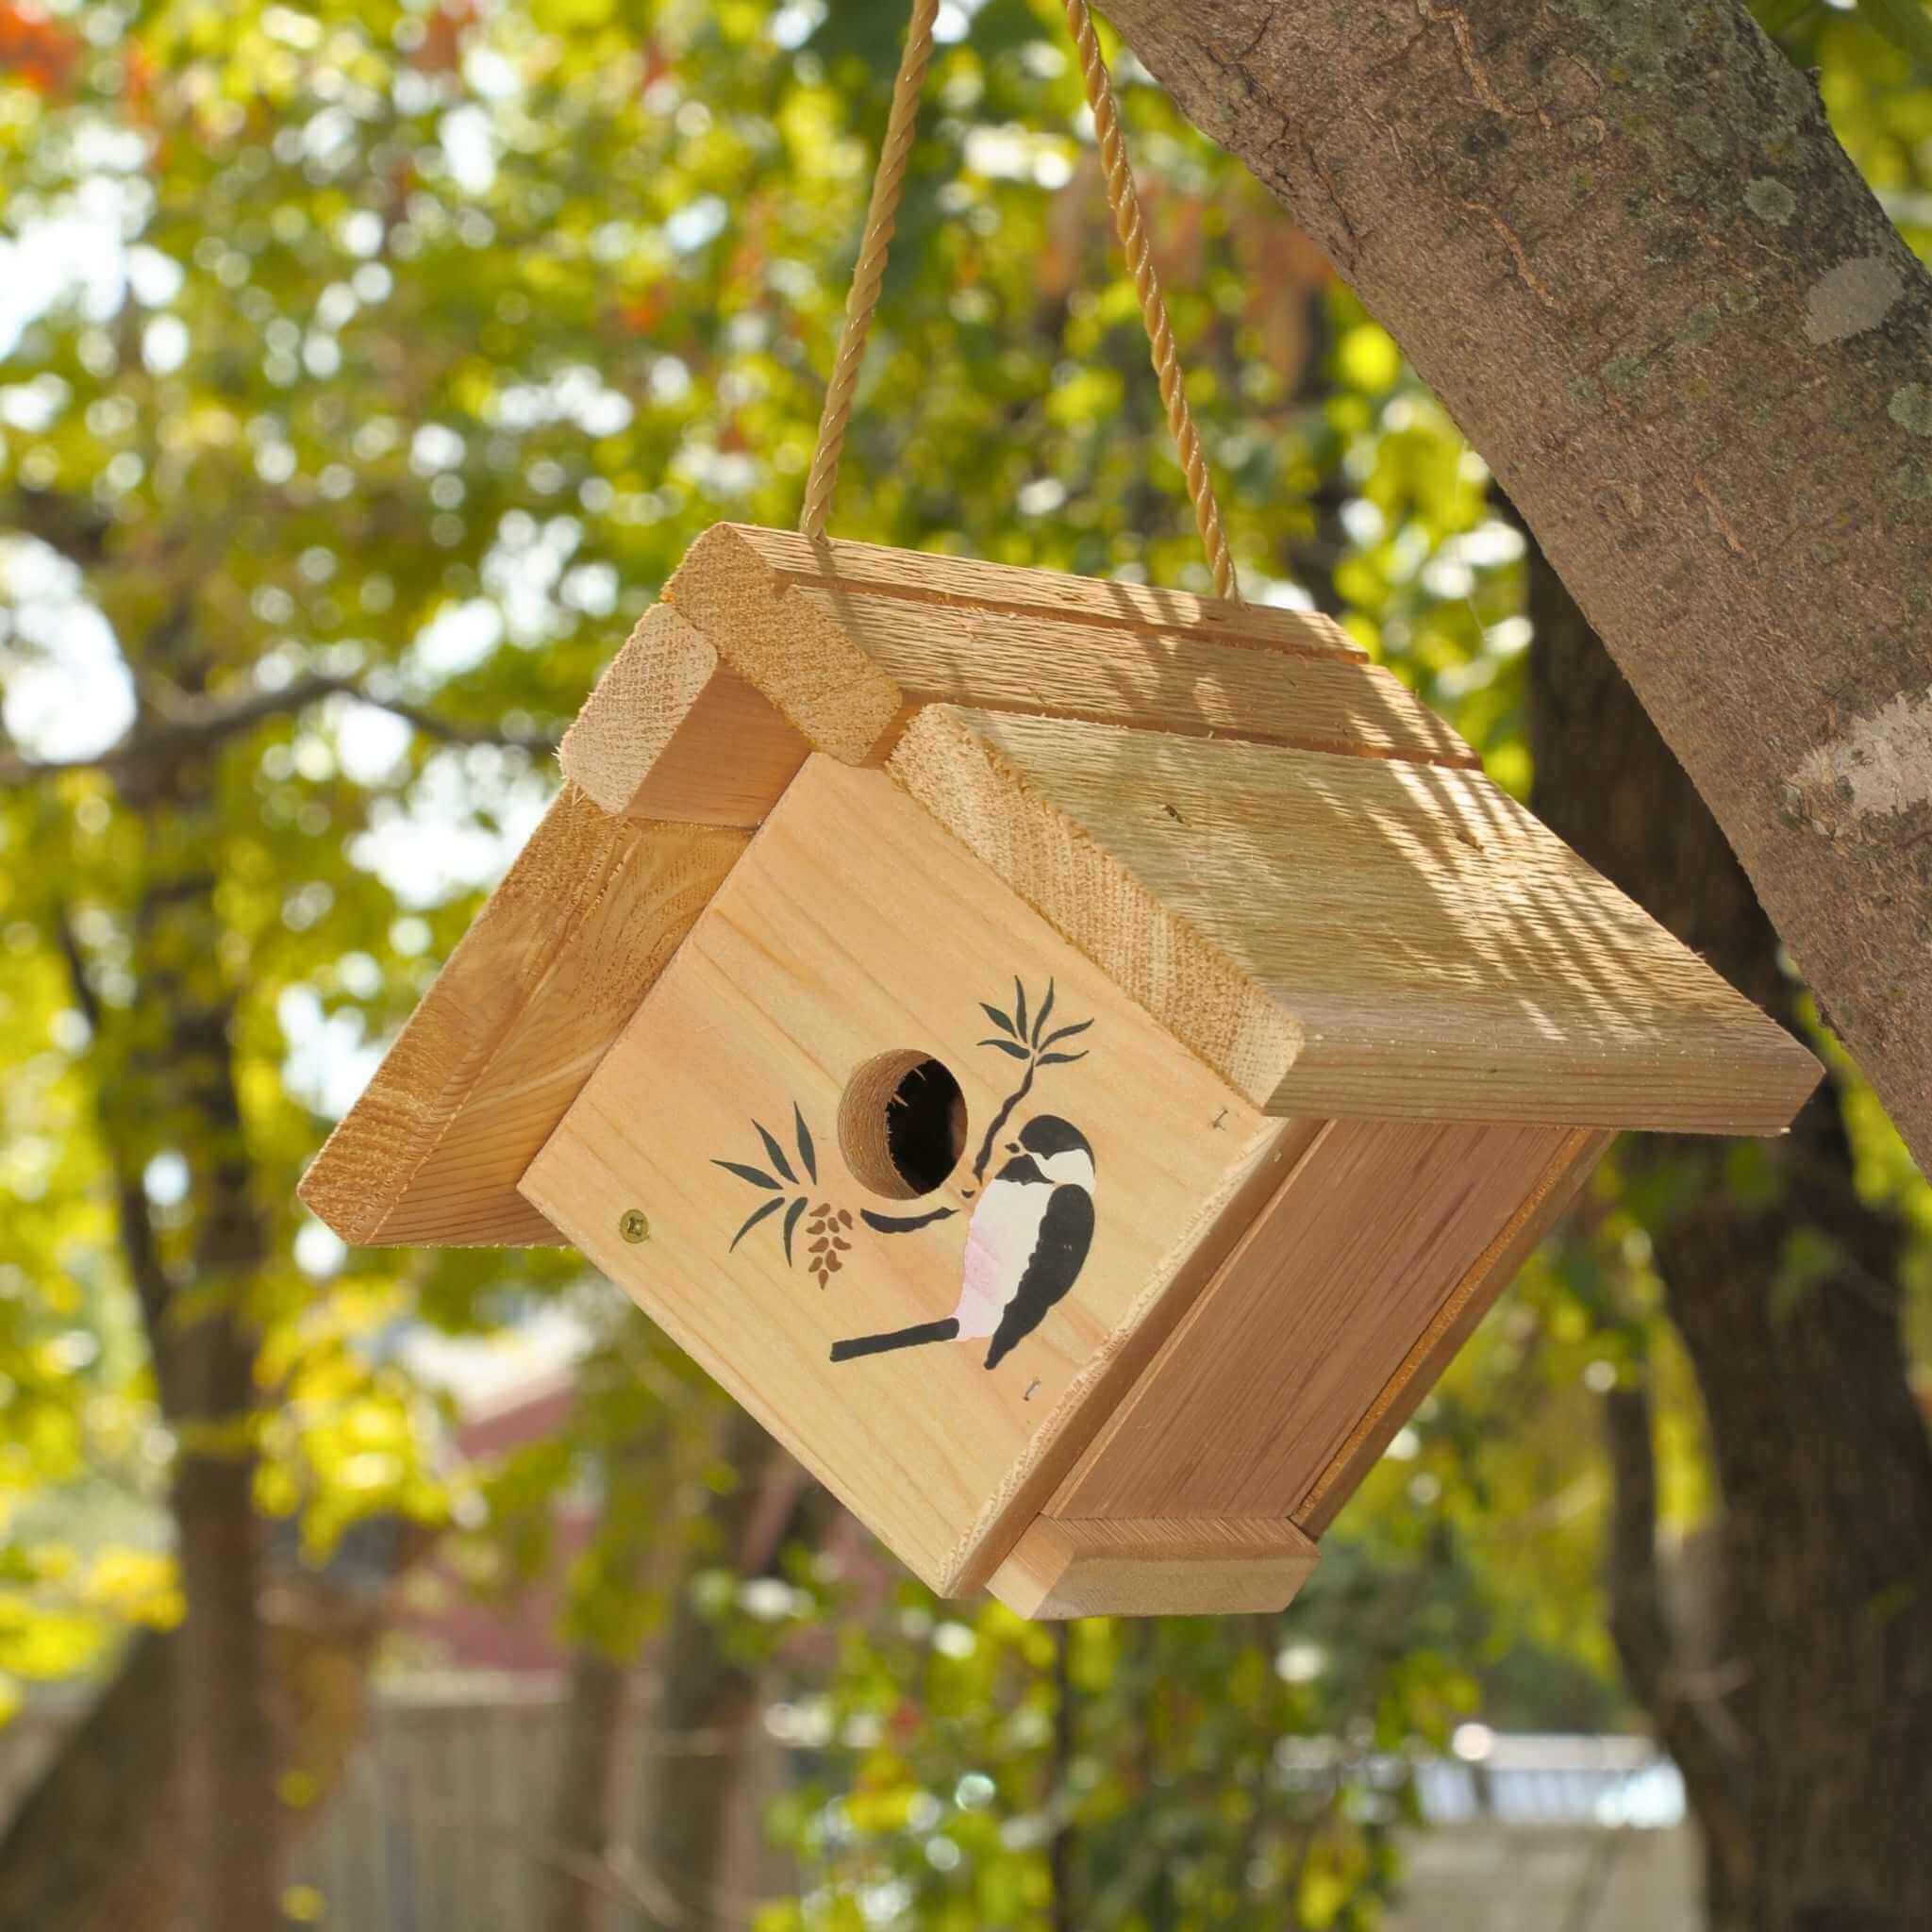 Chickadee Hanging Birdhouse - Cedar Wood | Winter Woodworks